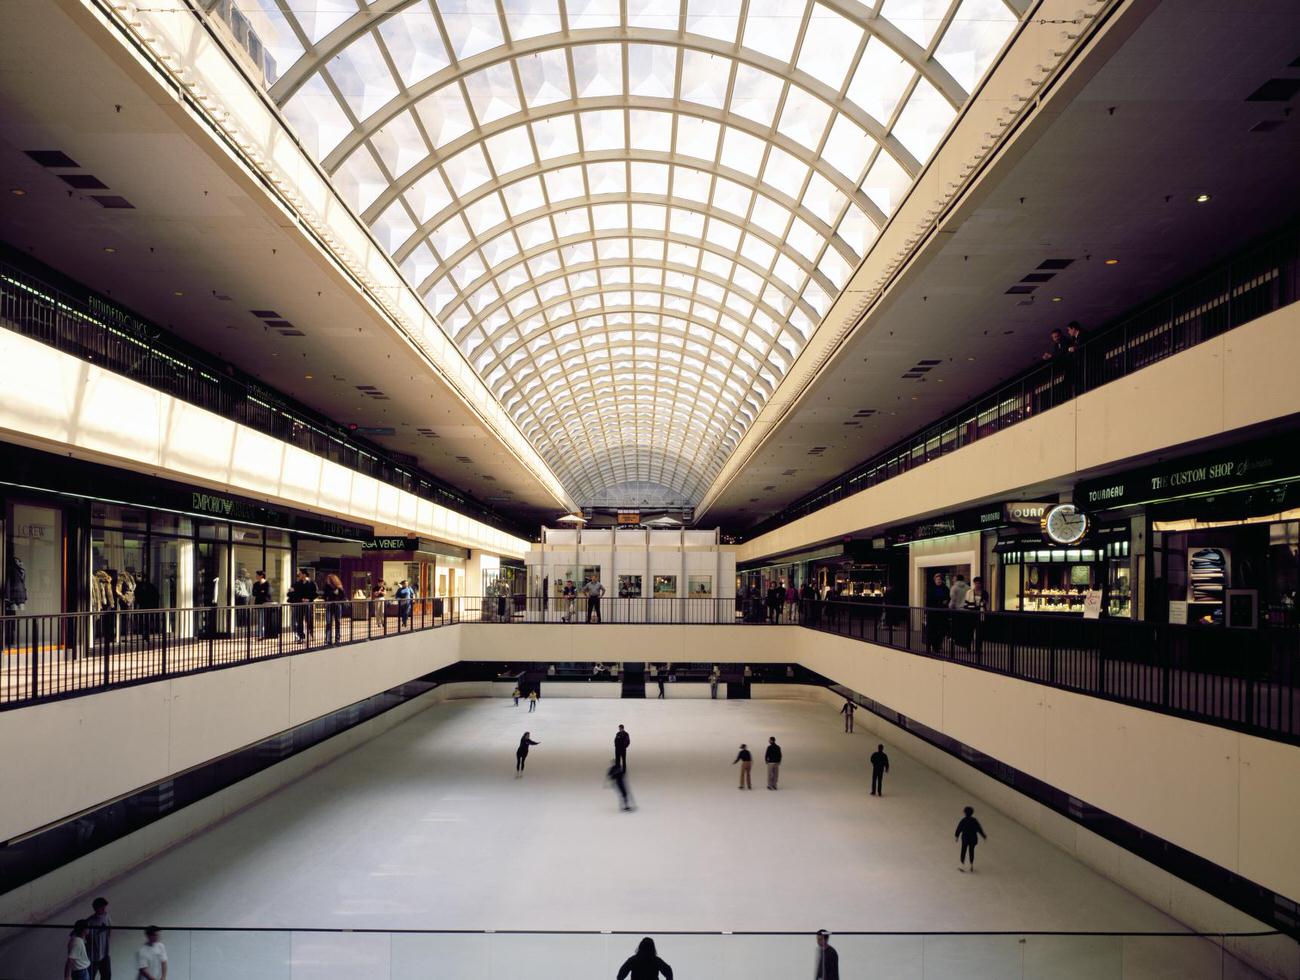 Skating rink inside Galleria Mall in Houston, 1990s